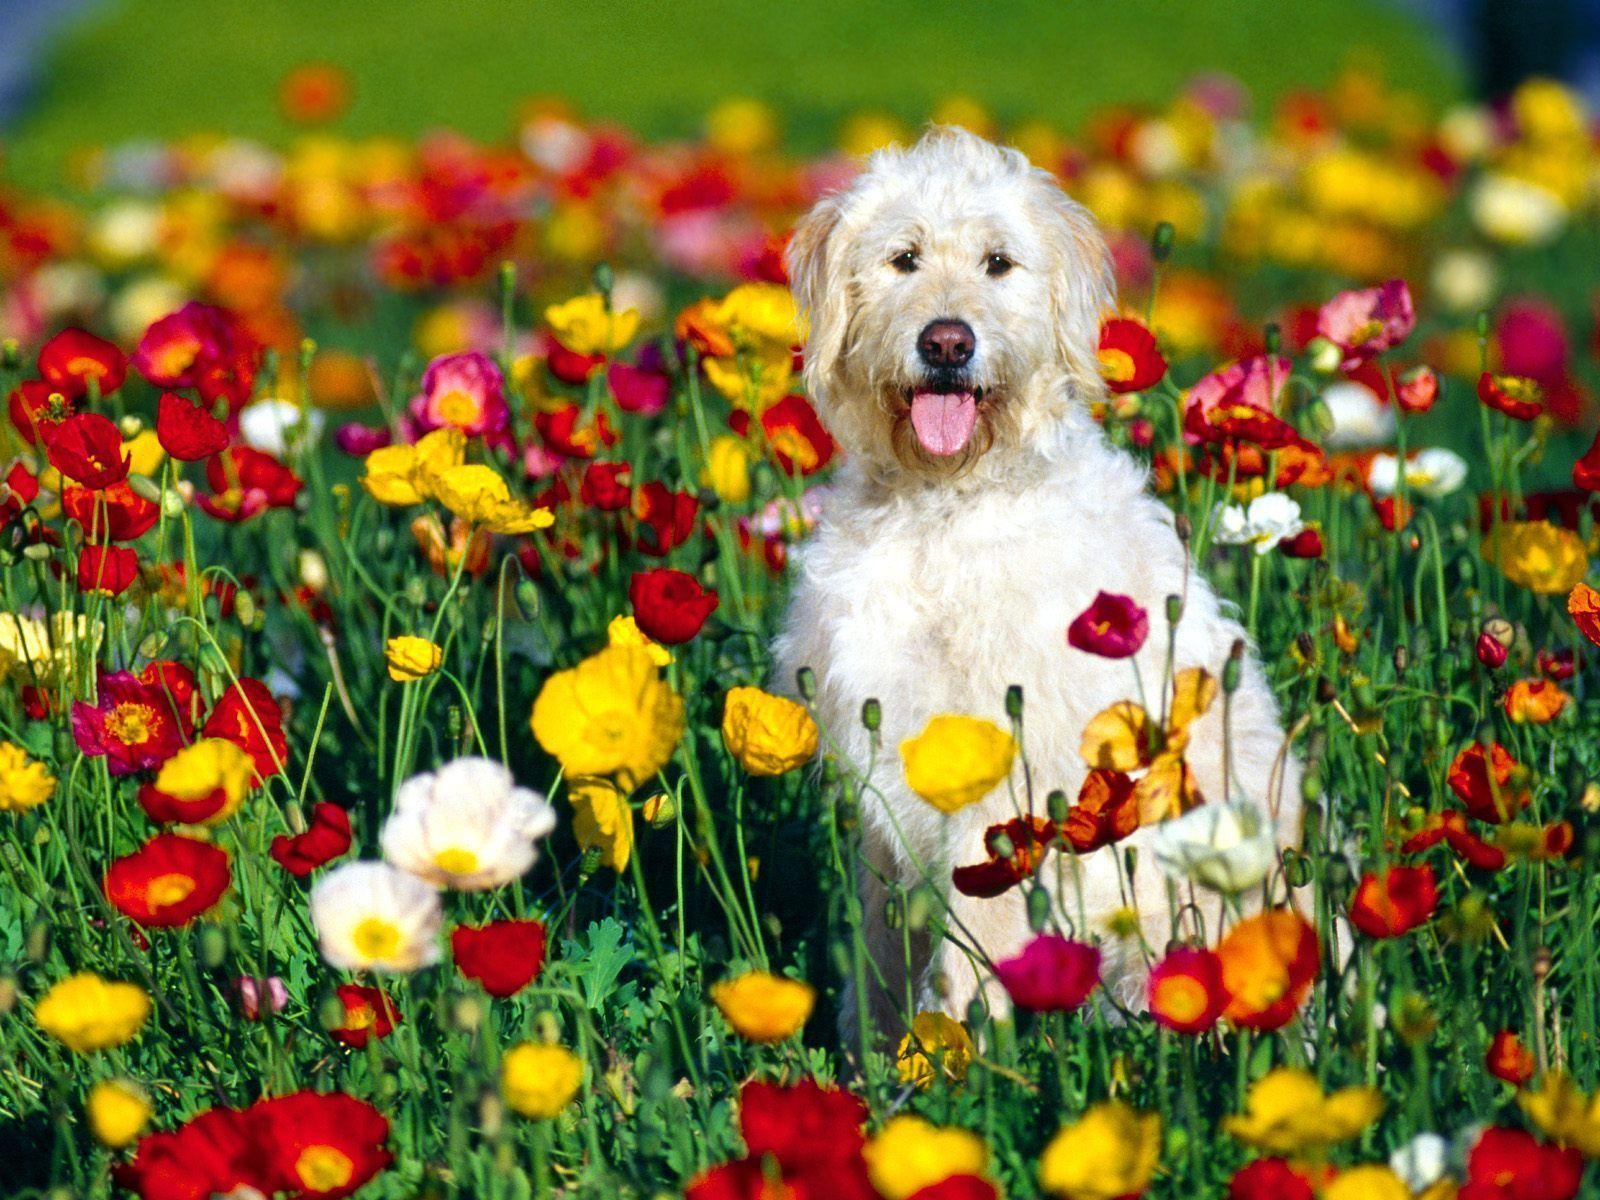 HD cute irish wolfhound in flower field Wallpaper Post has